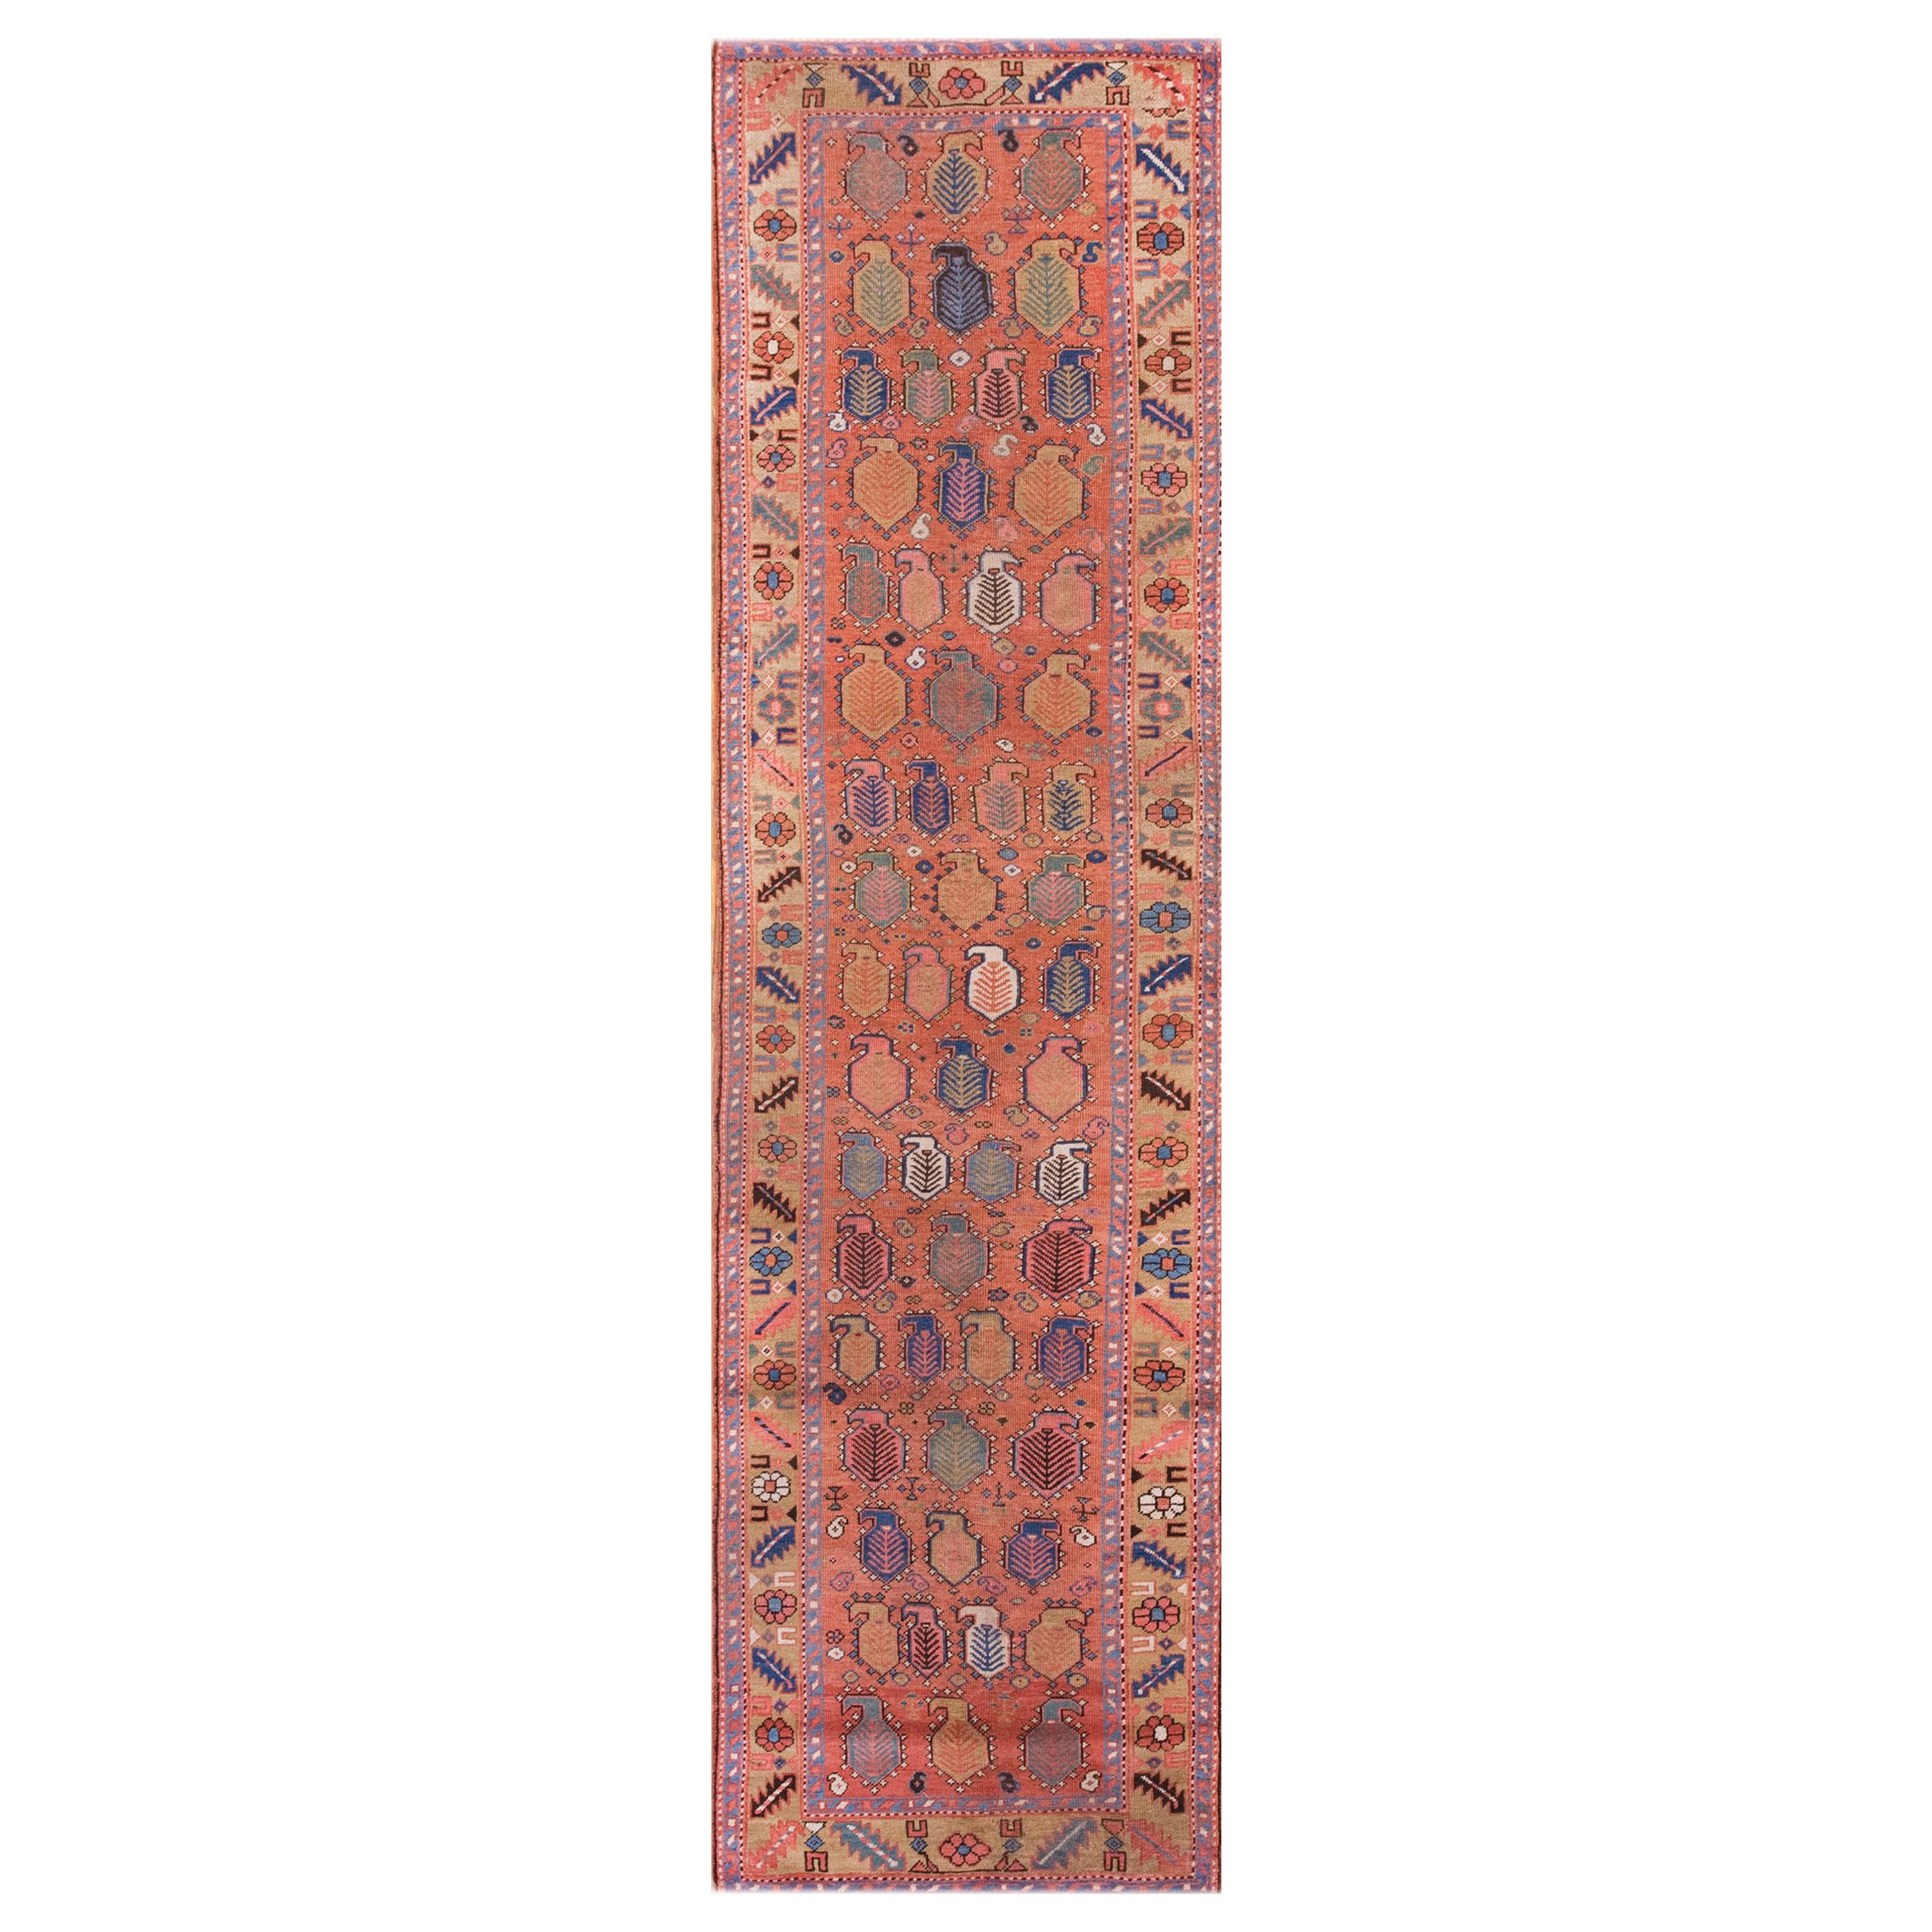 19th Century N.W. Persian Bakshaiesh Carpet ( 3'4" x 12'6" - 102  x  380 )